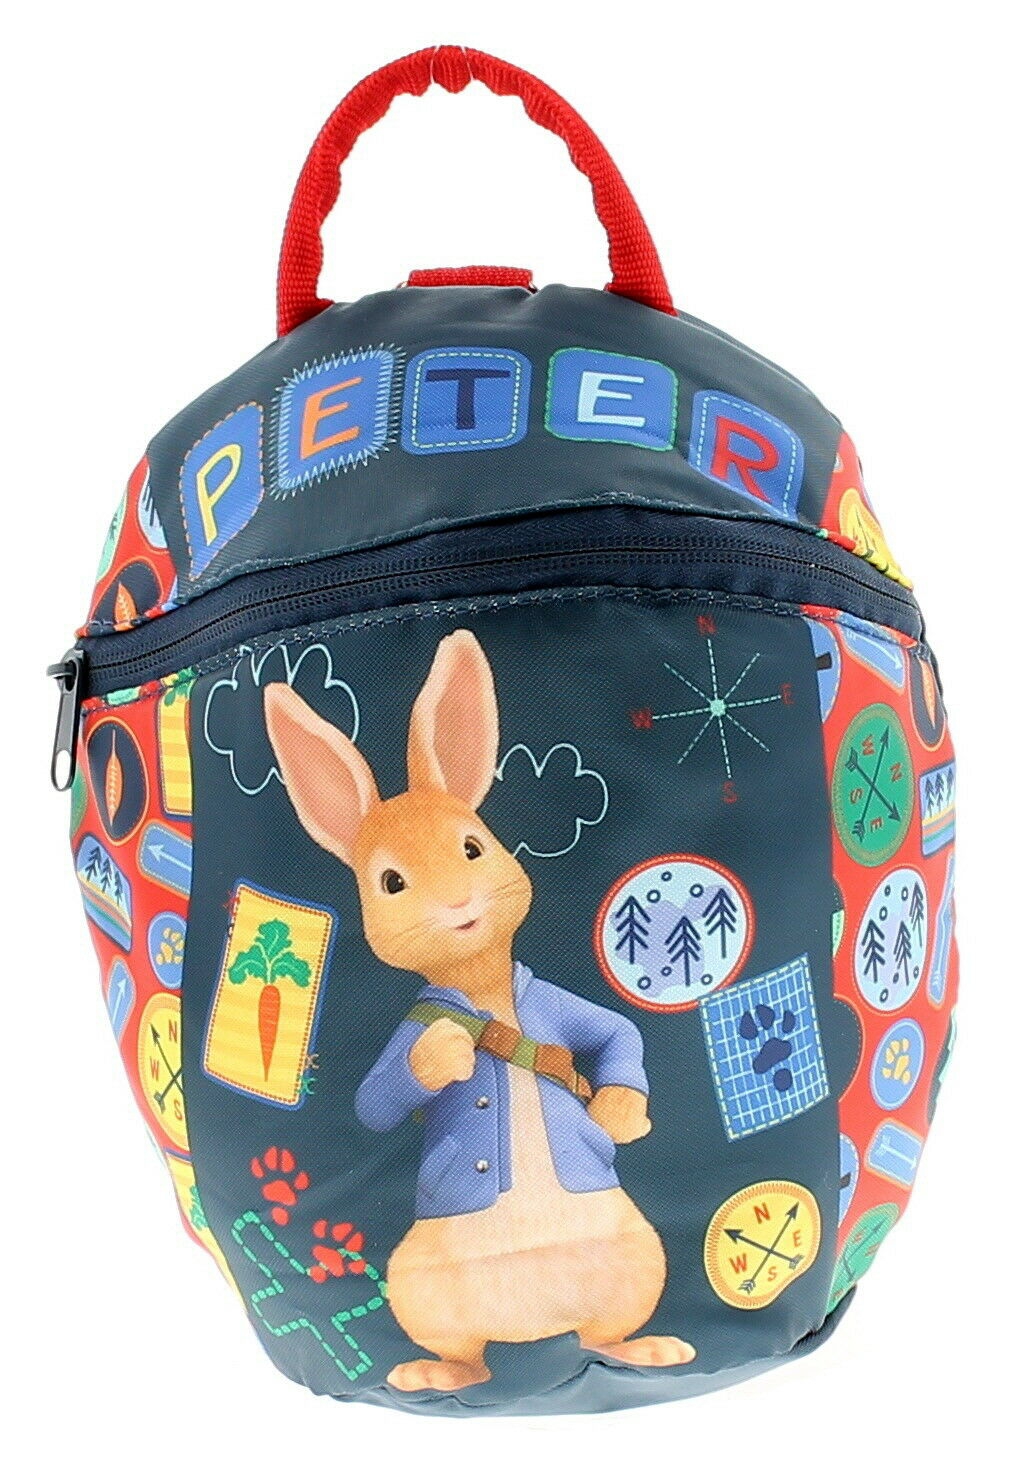 Peter Rabbit Reins Kids Bag Blue School Rucksack Backpack